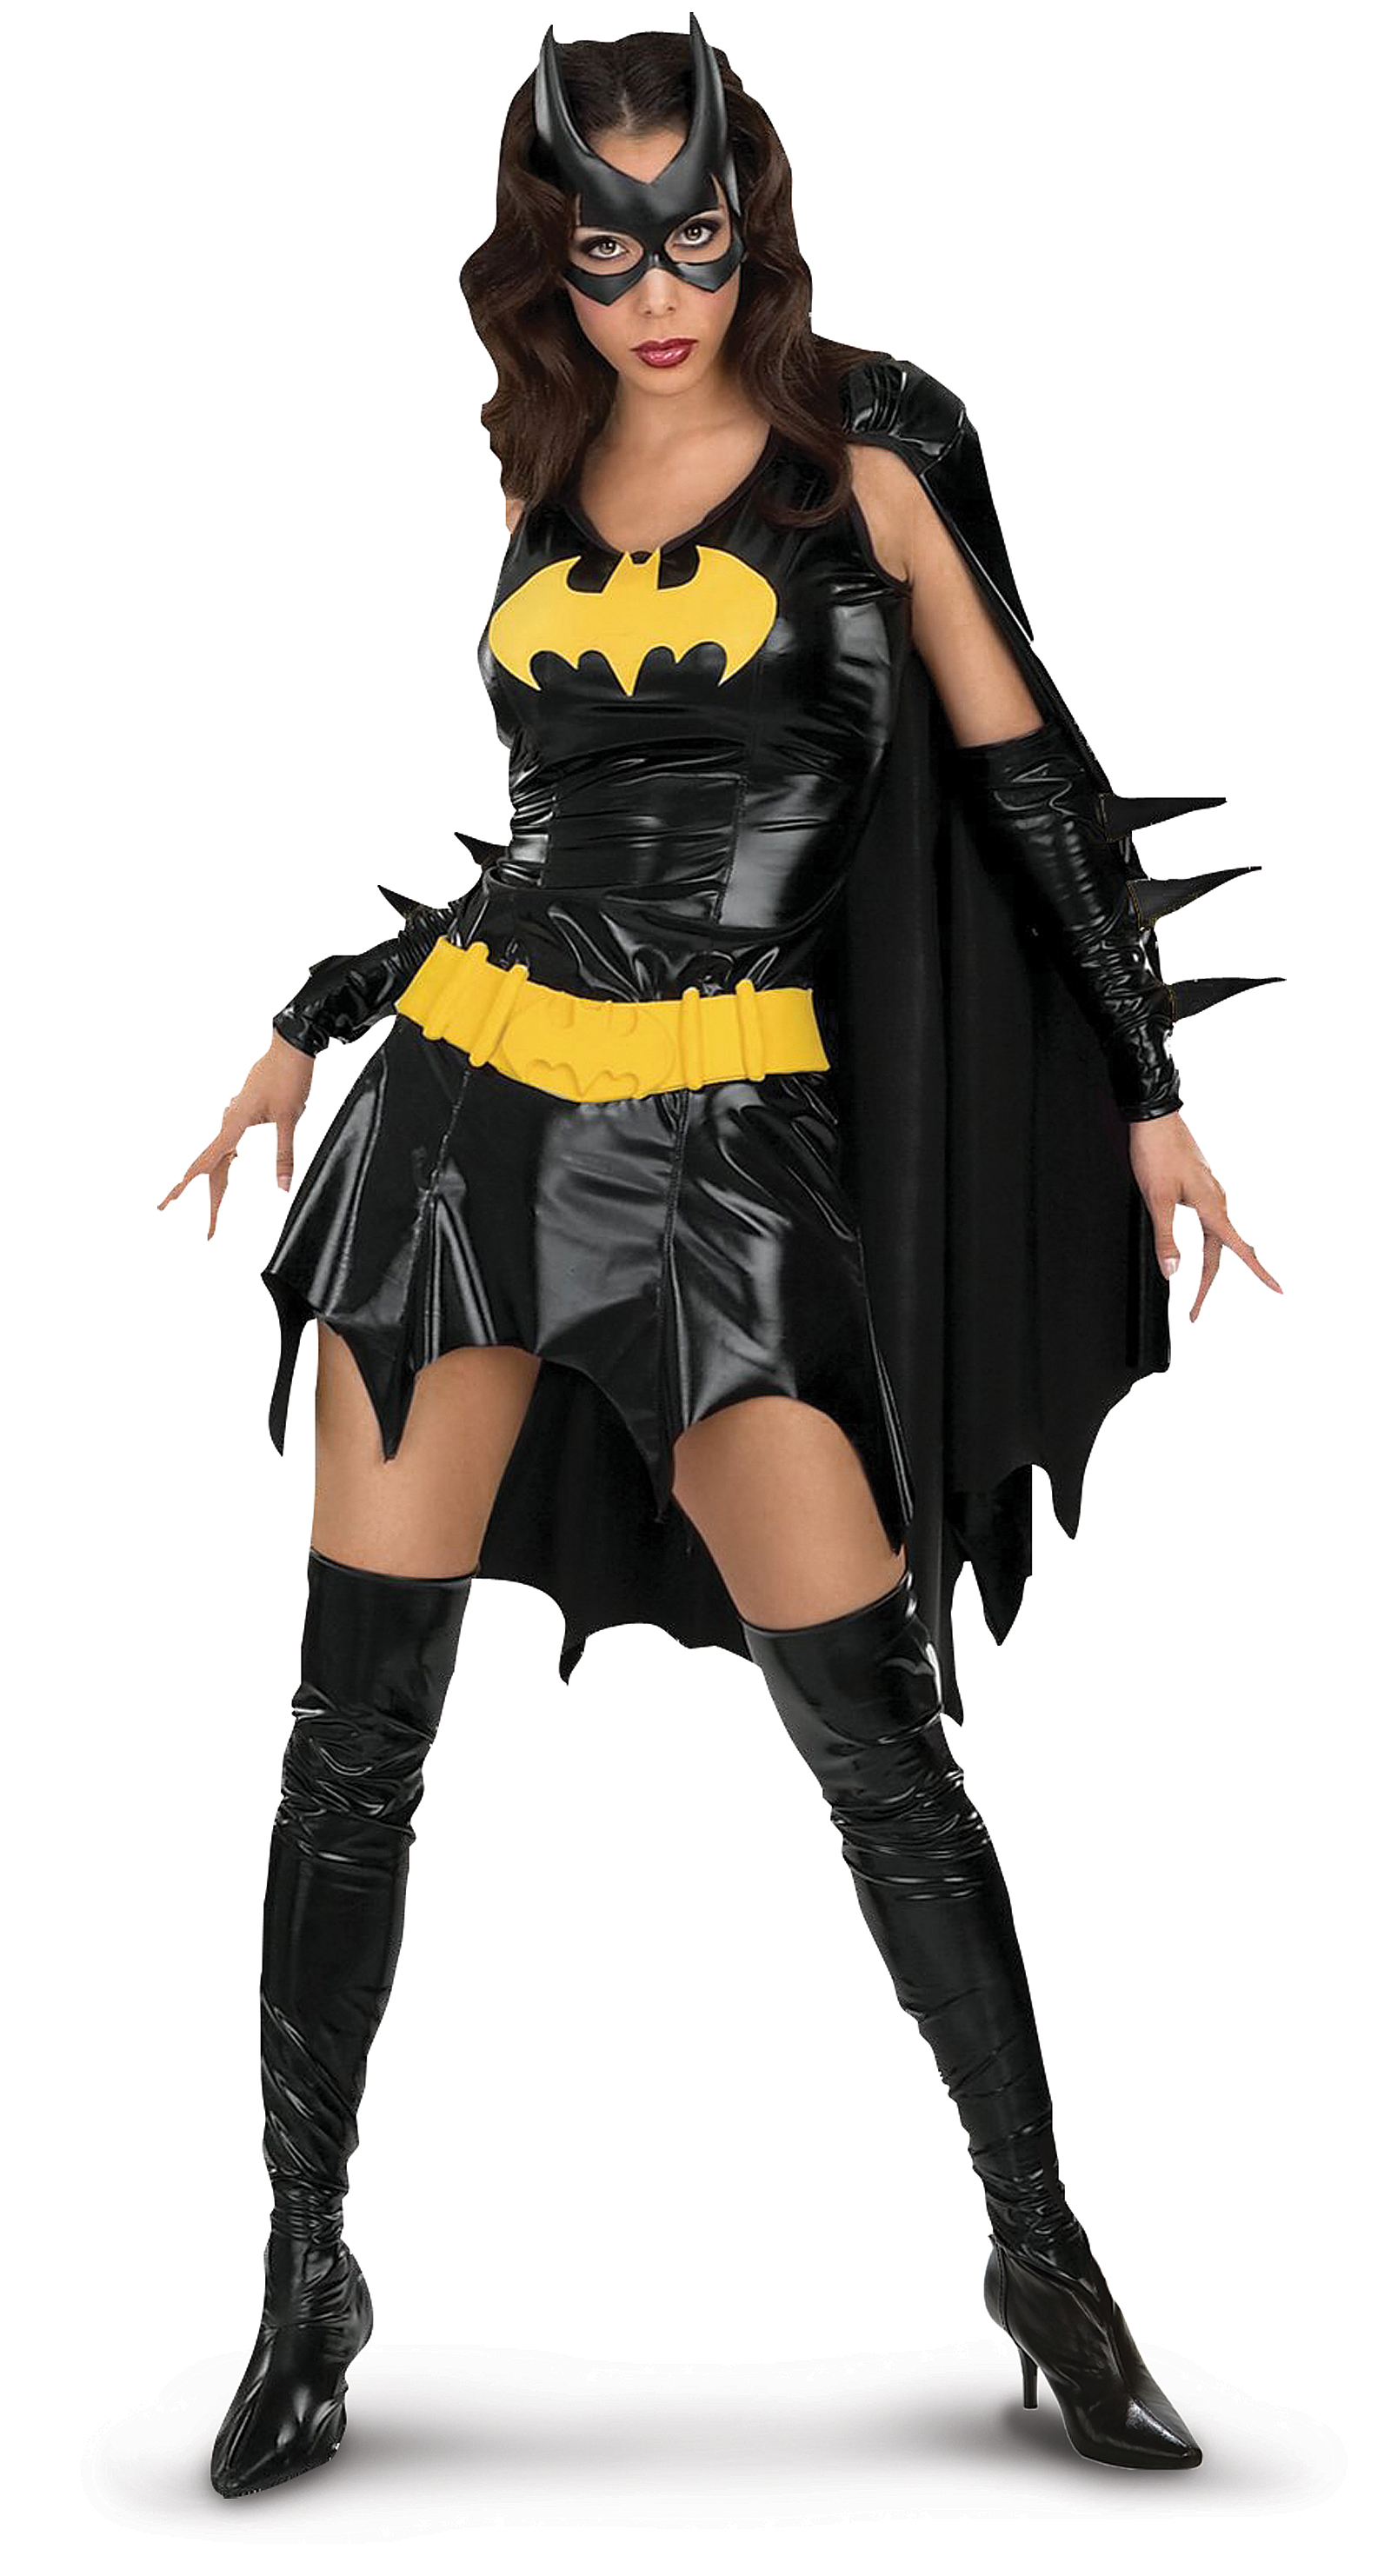 Adult Female Halloween Costumes on Sexy Batgirl Superhero Halloween Costume Image